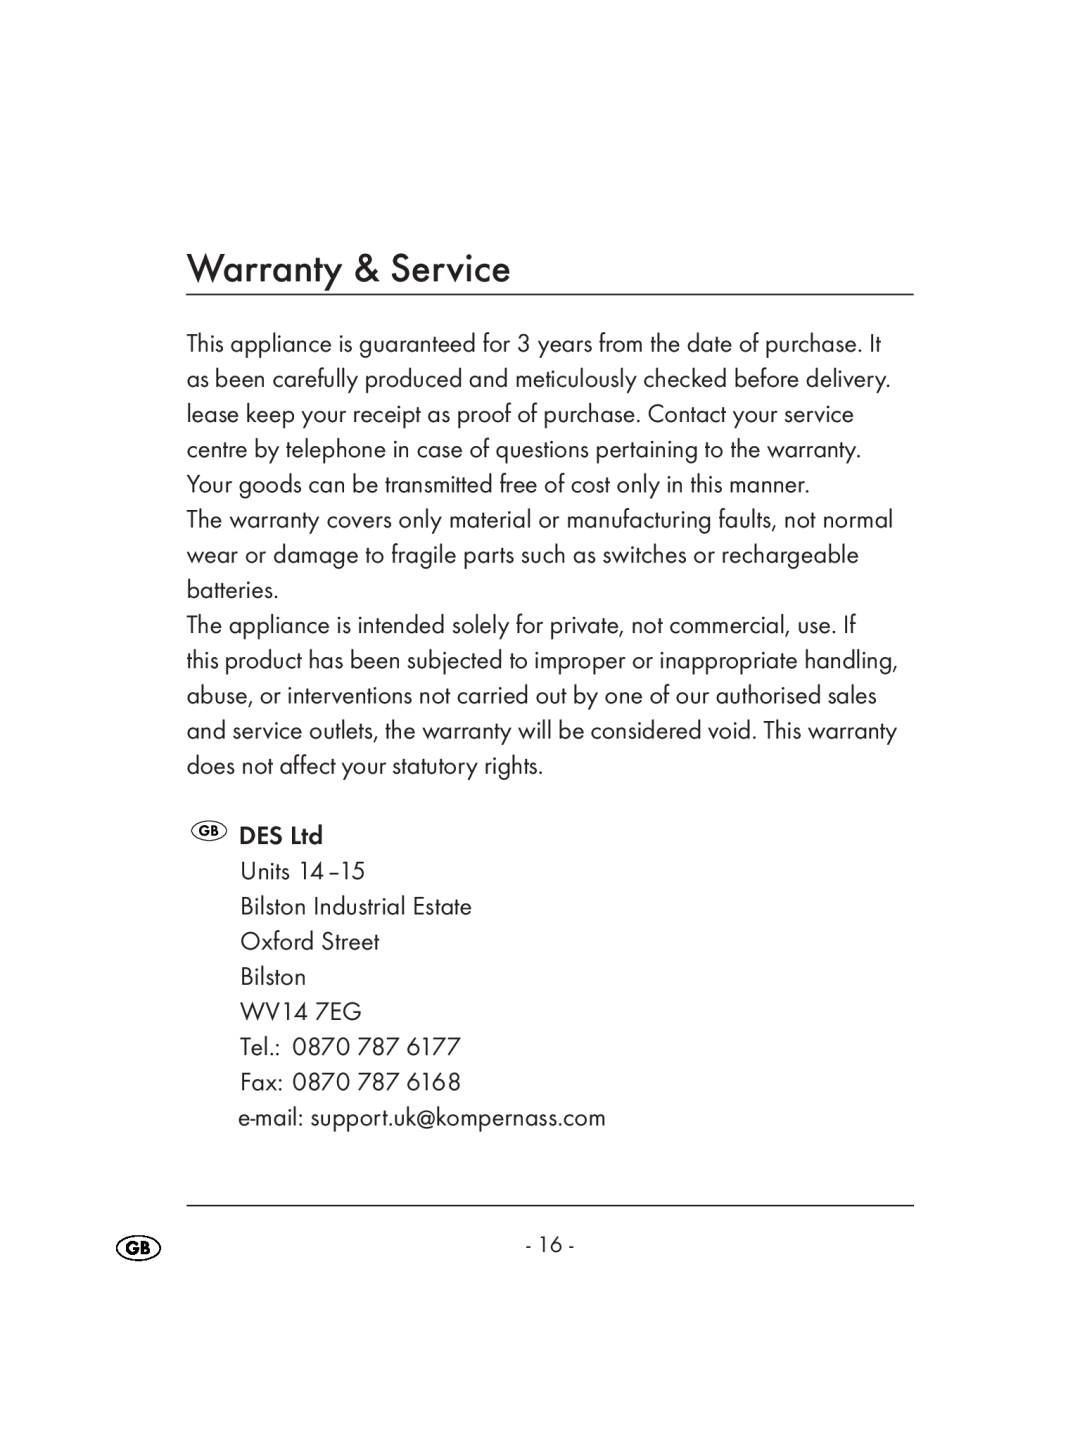 Kompernass KH 4083 manual Warranty & Service, Bilston Industrial Estate Oxford Street Bilston, WV14 7EG Tel. 0870 787 Fax 